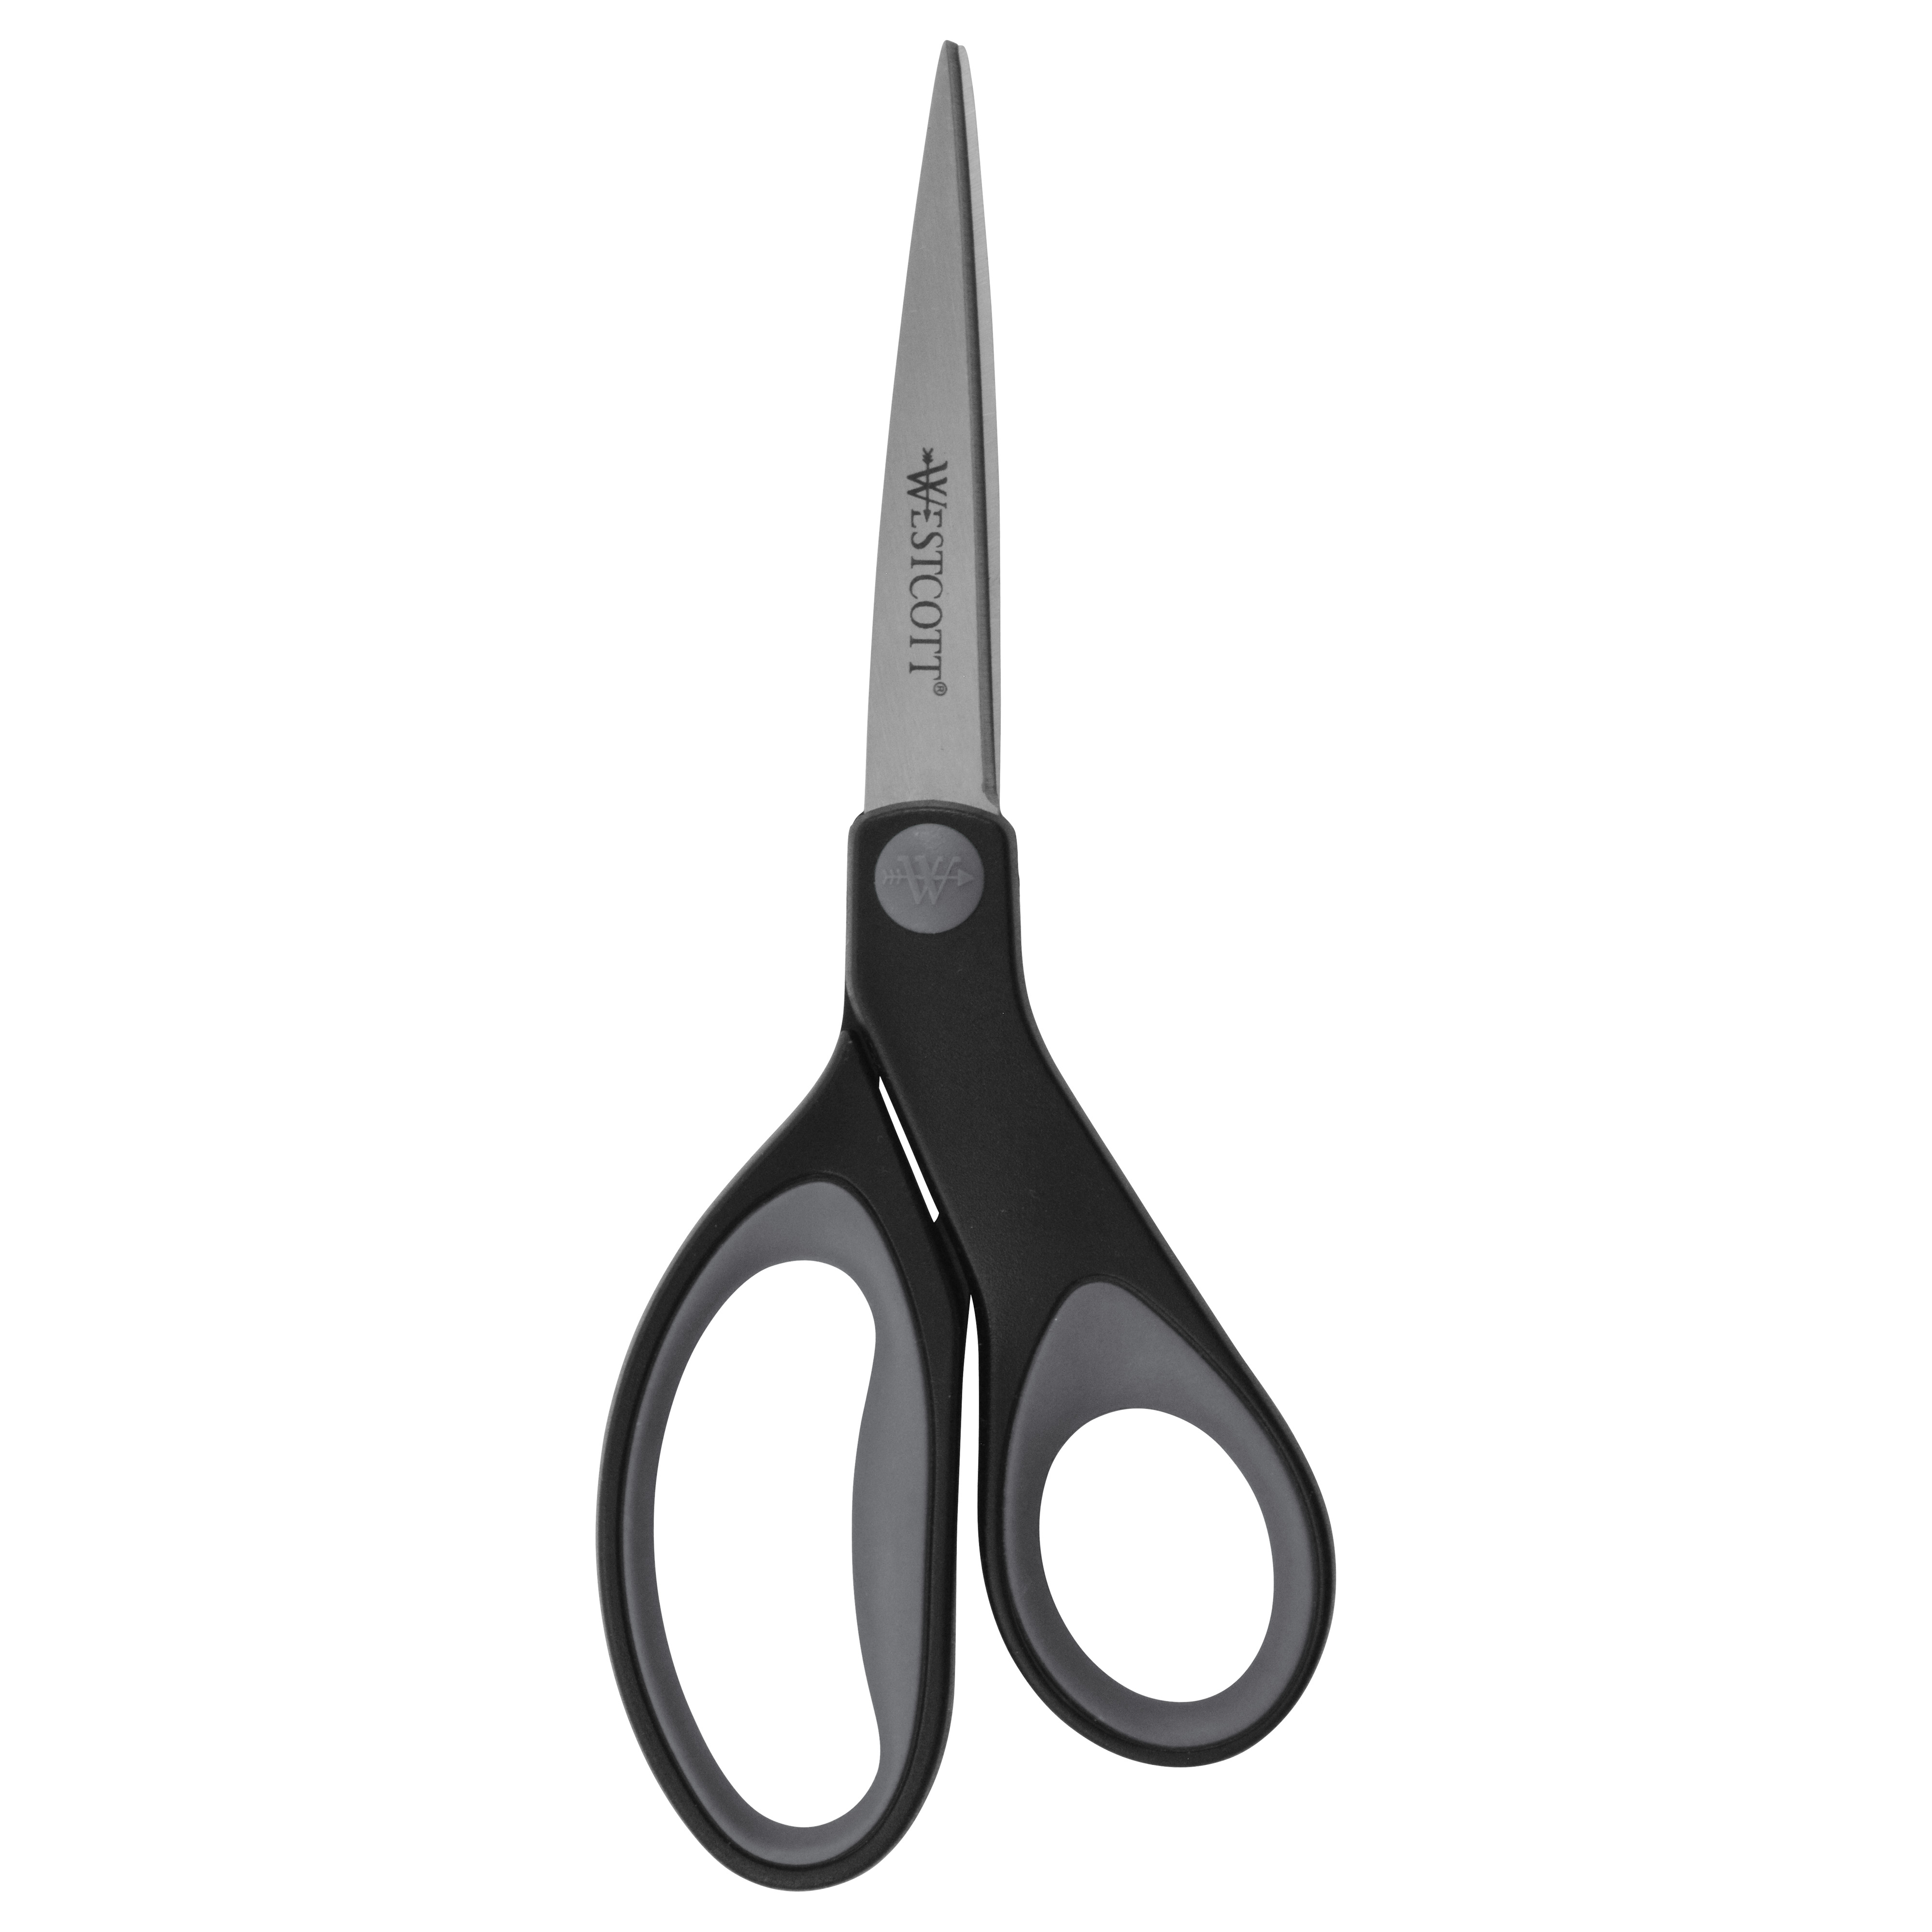 Westcott 8" Fun & Fashion Scissor (Gray and Black) - image 1 of 4